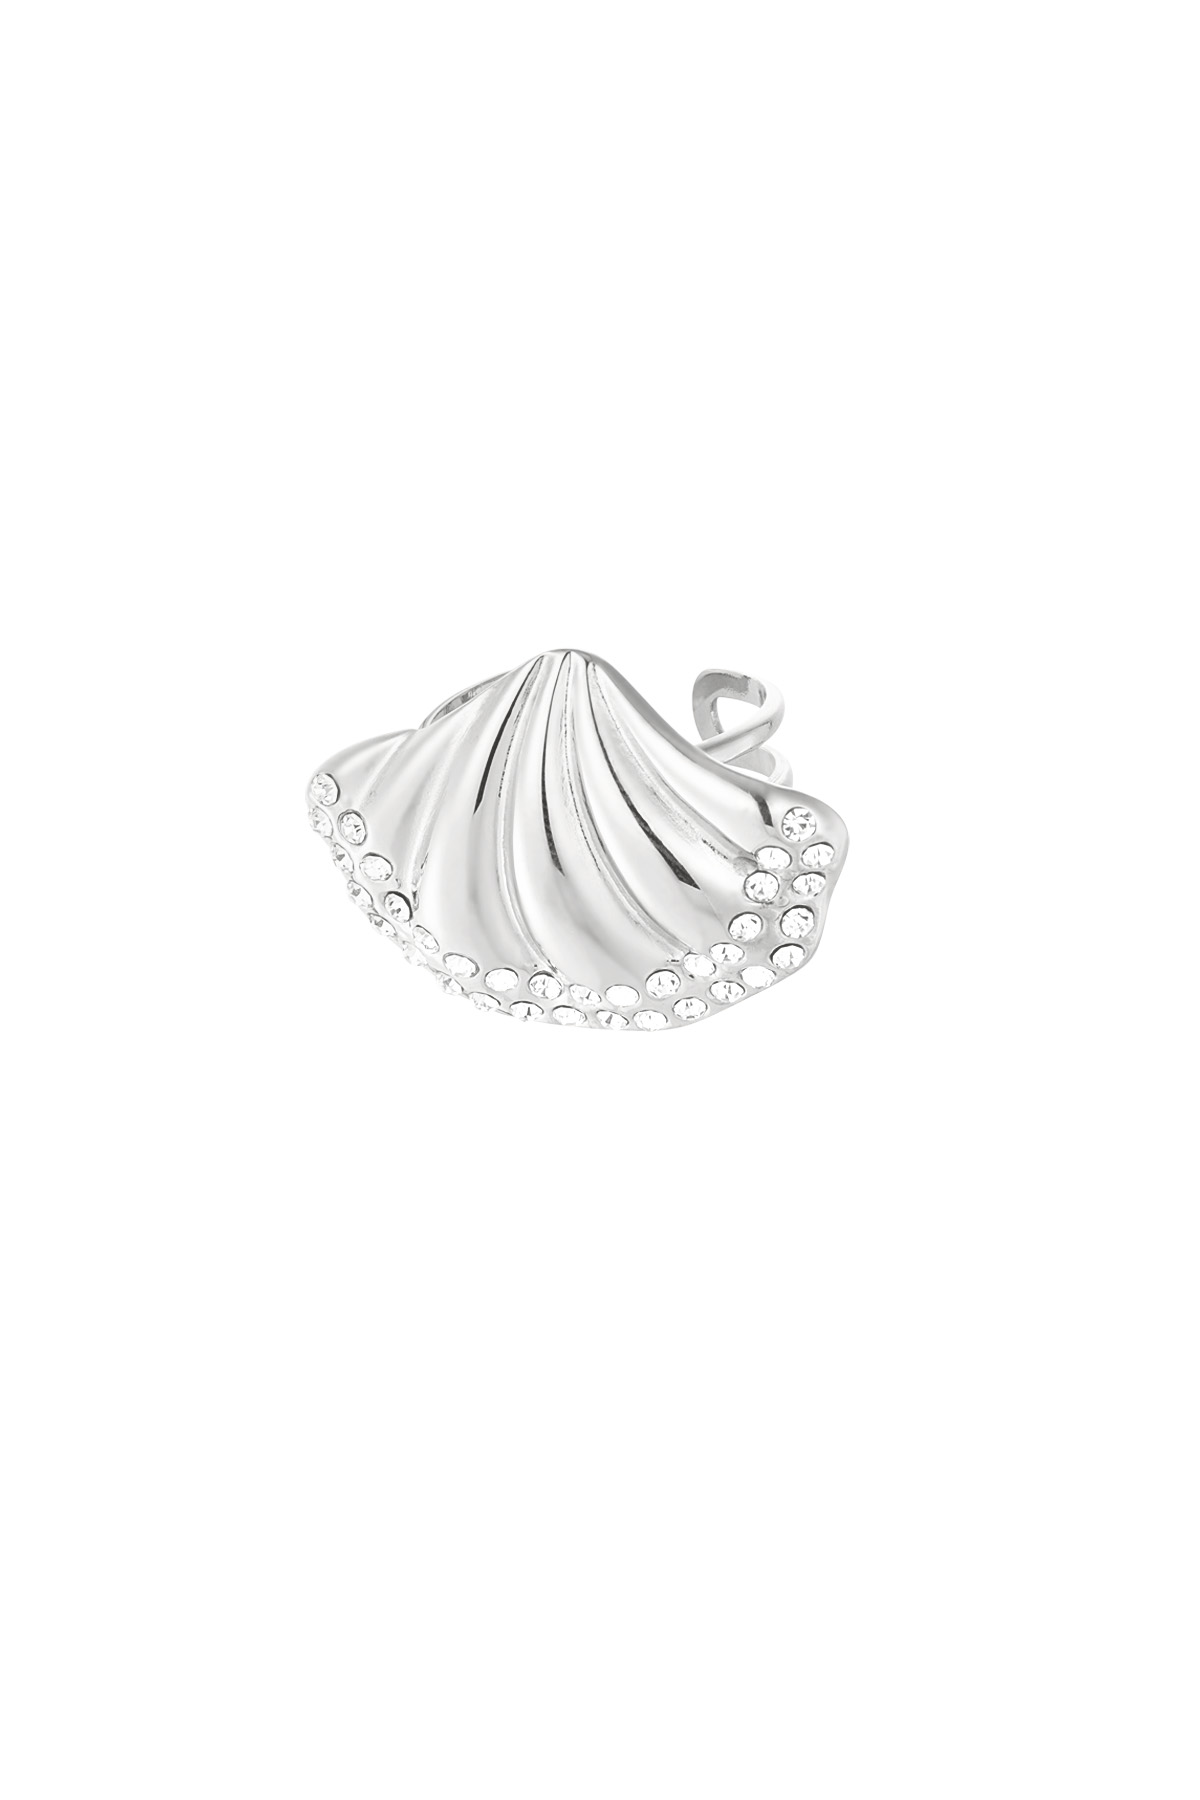 Ring shell shimmer - zilver